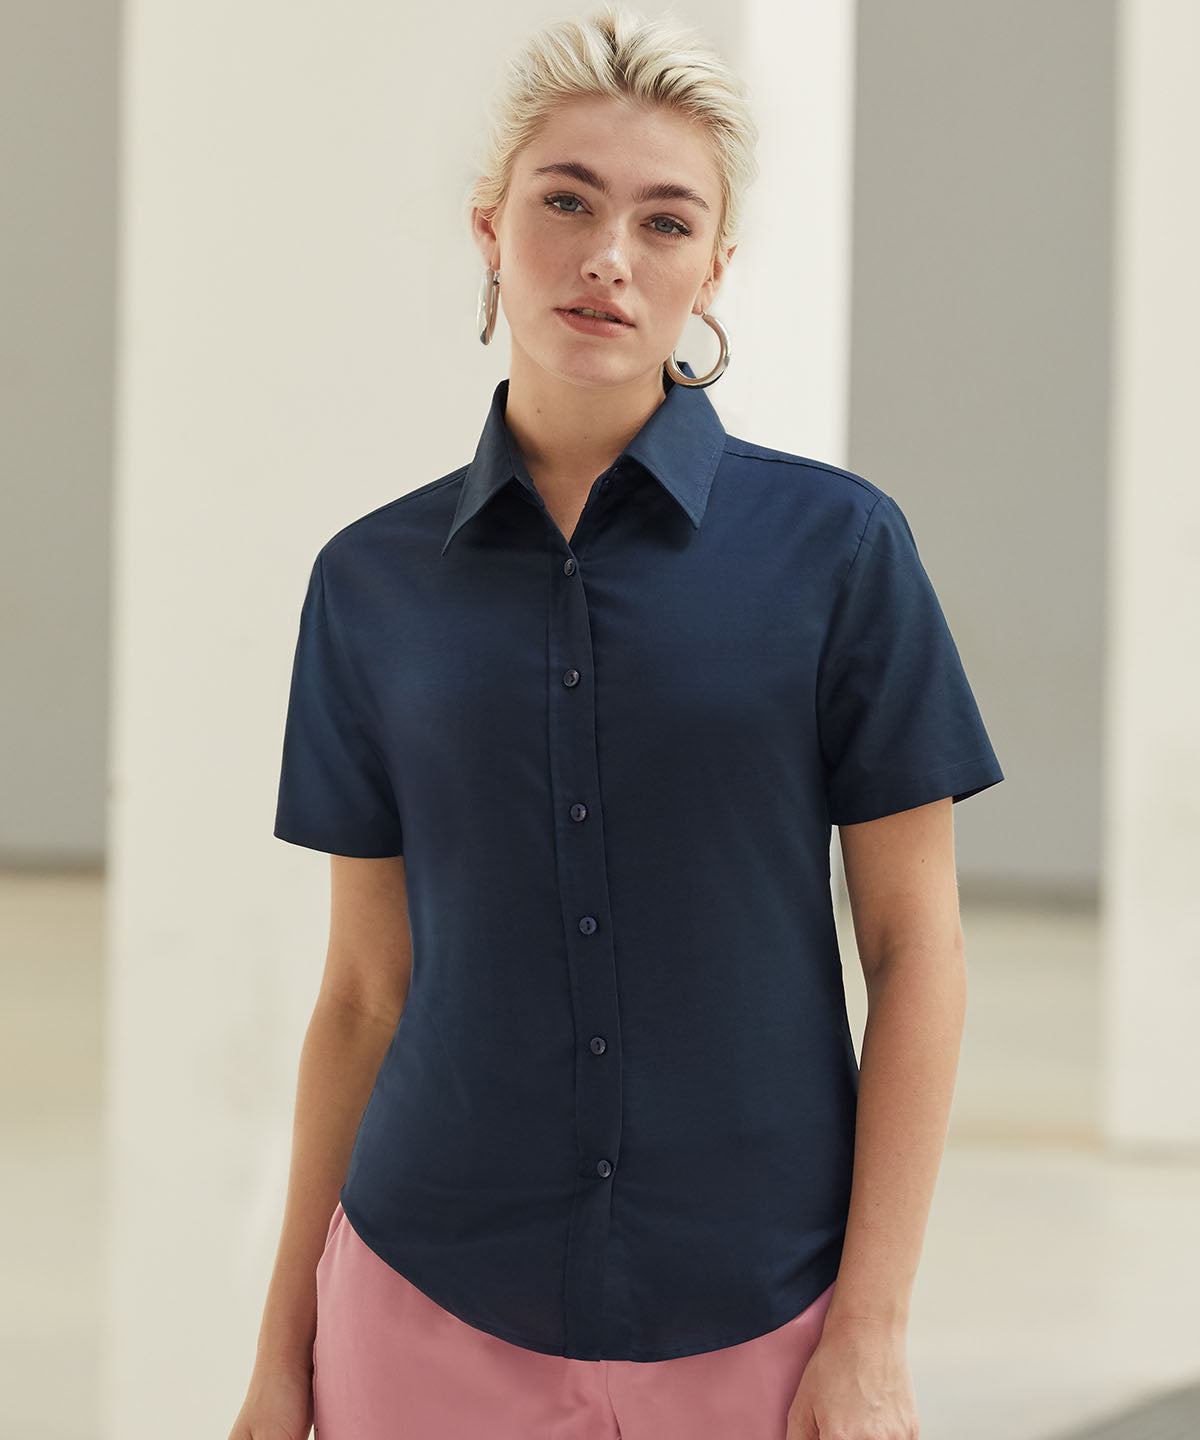 Bolir - Women's Oxford Short Sleeve Shirt